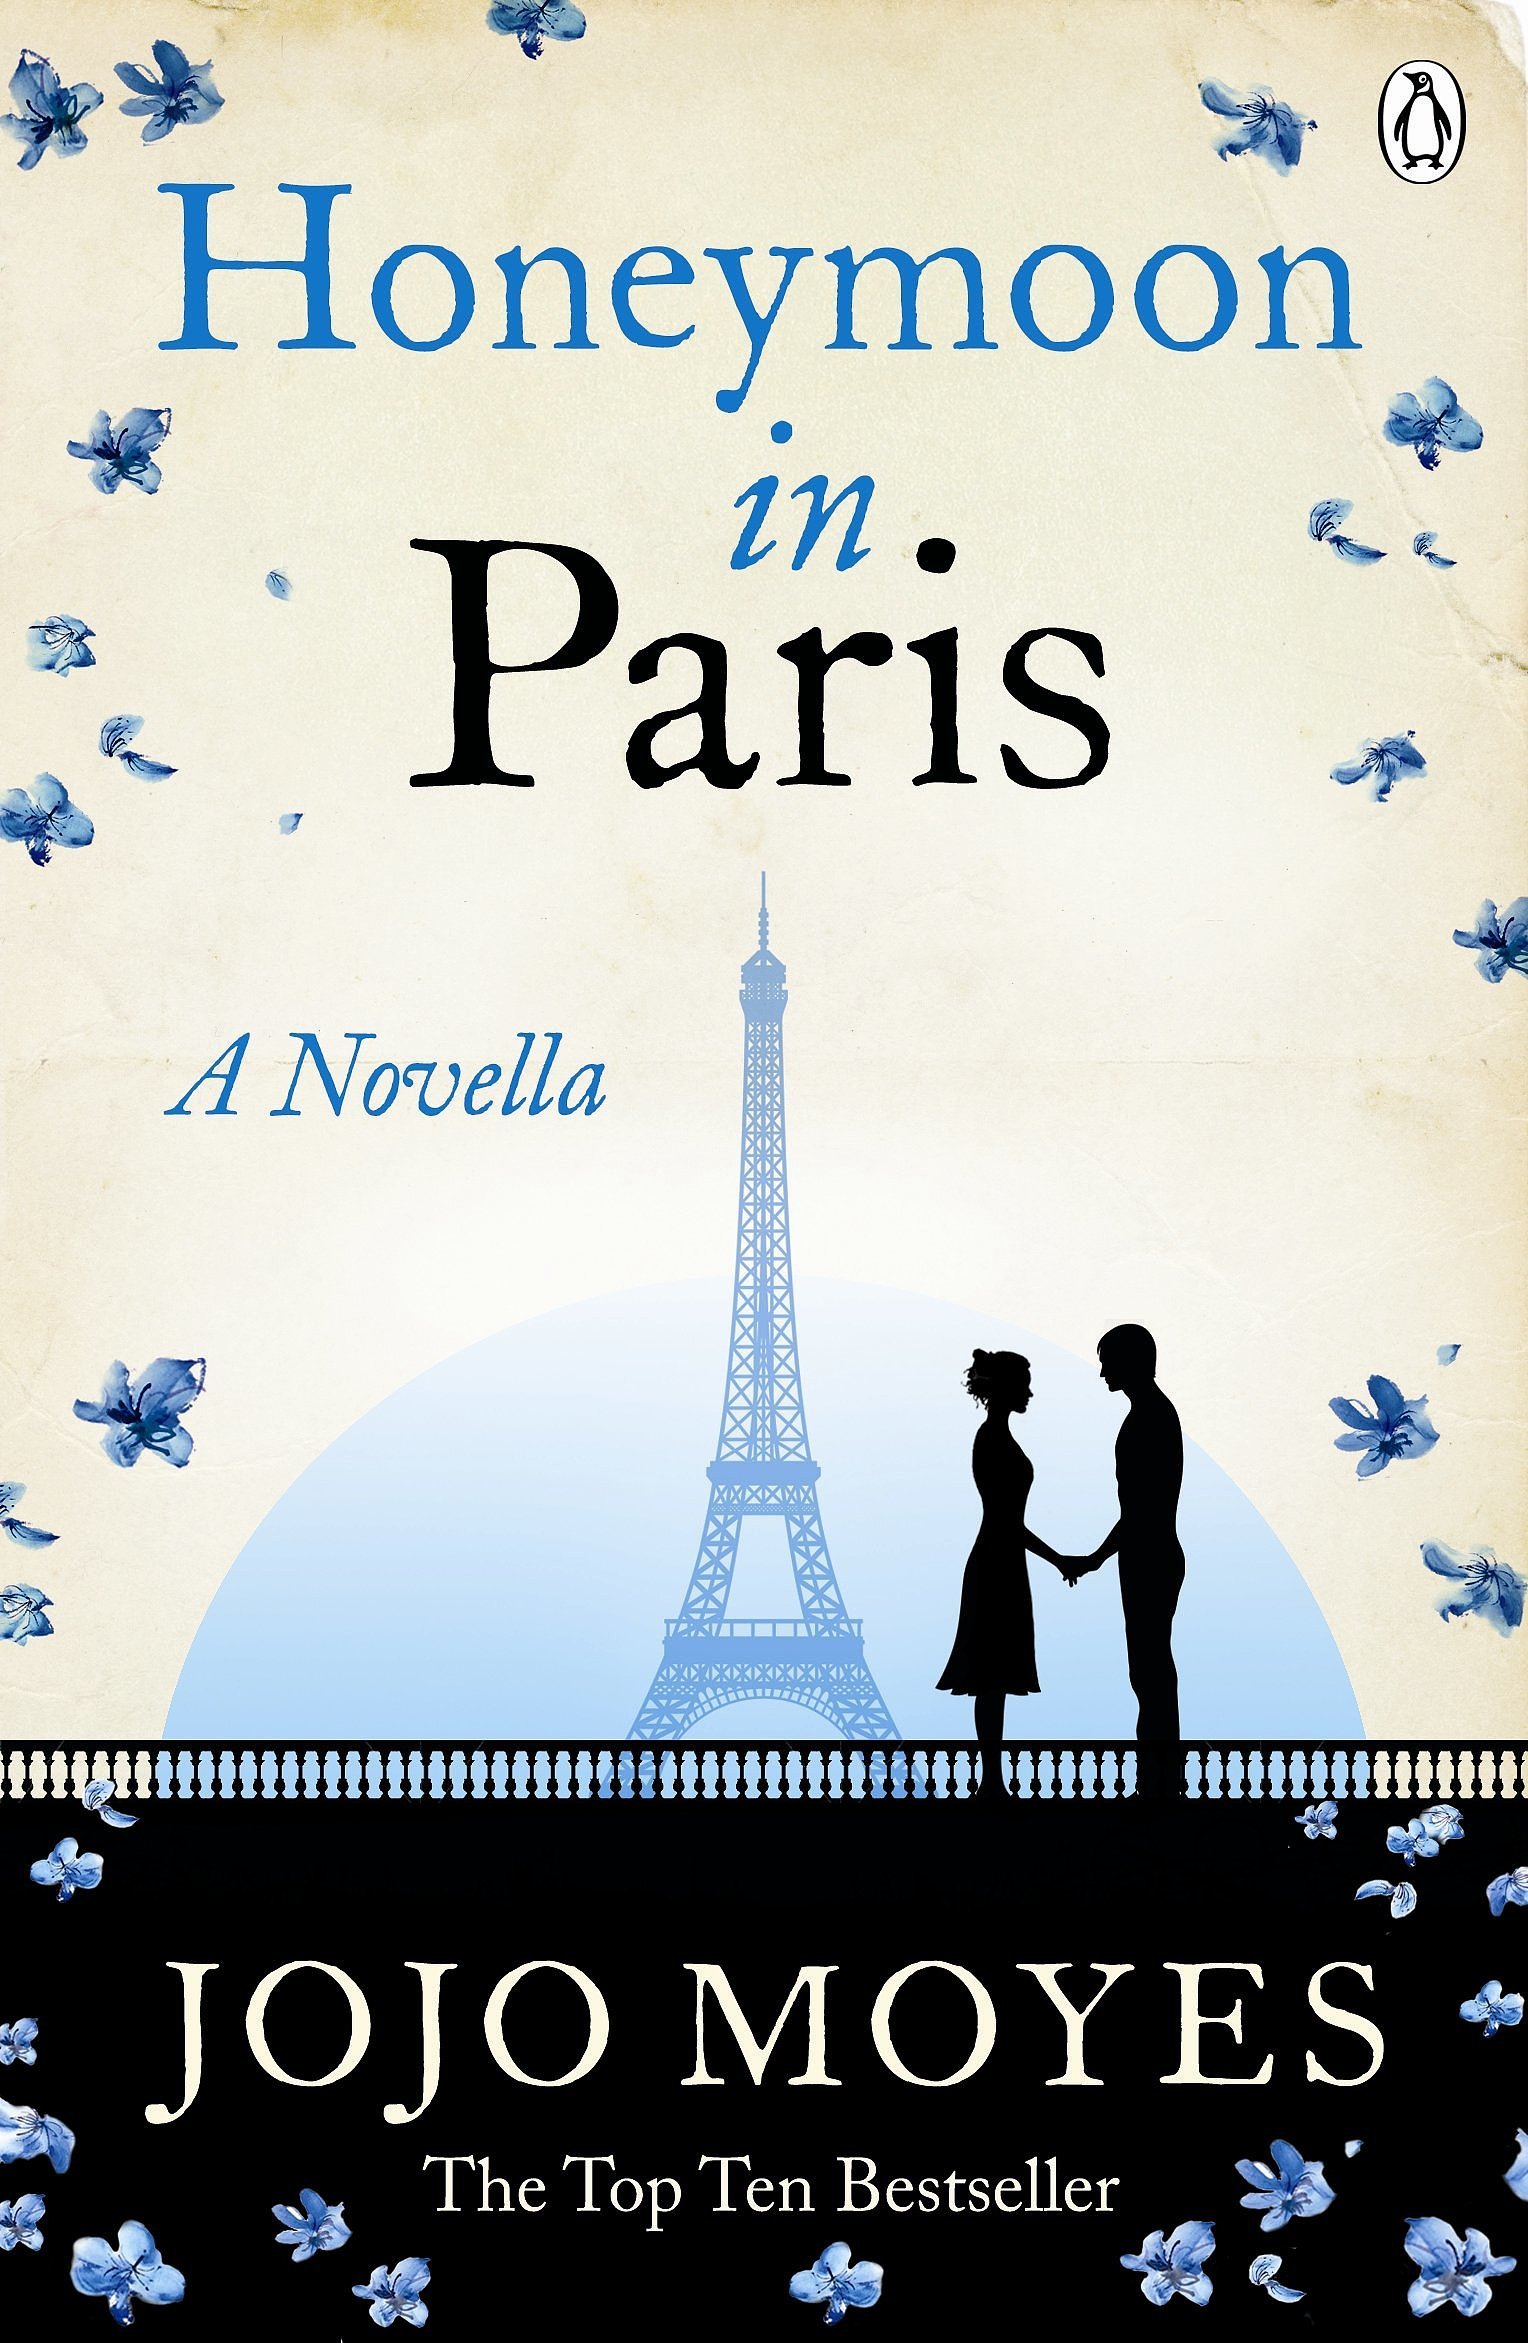 Honeymoon in Paris: A Novella